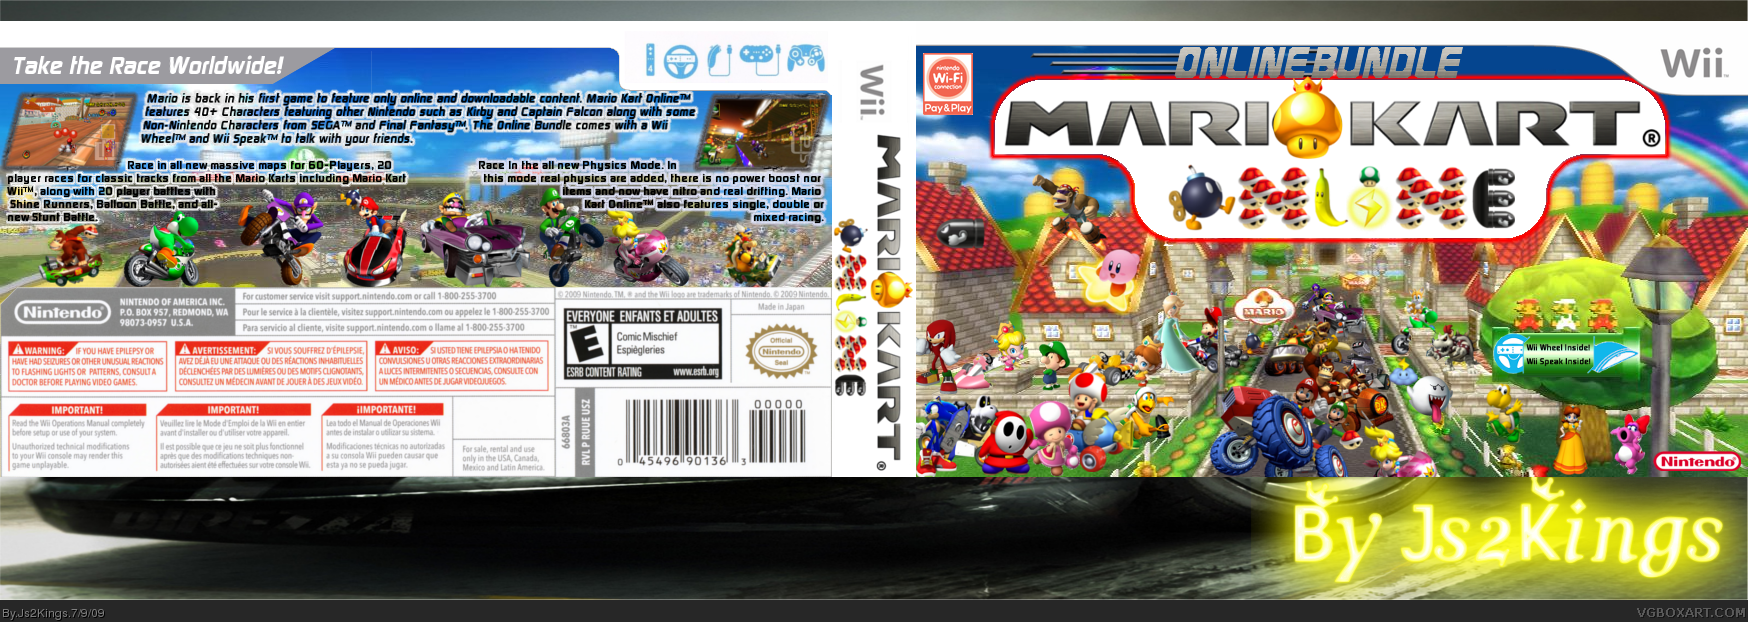 Mario Kart Online box cover